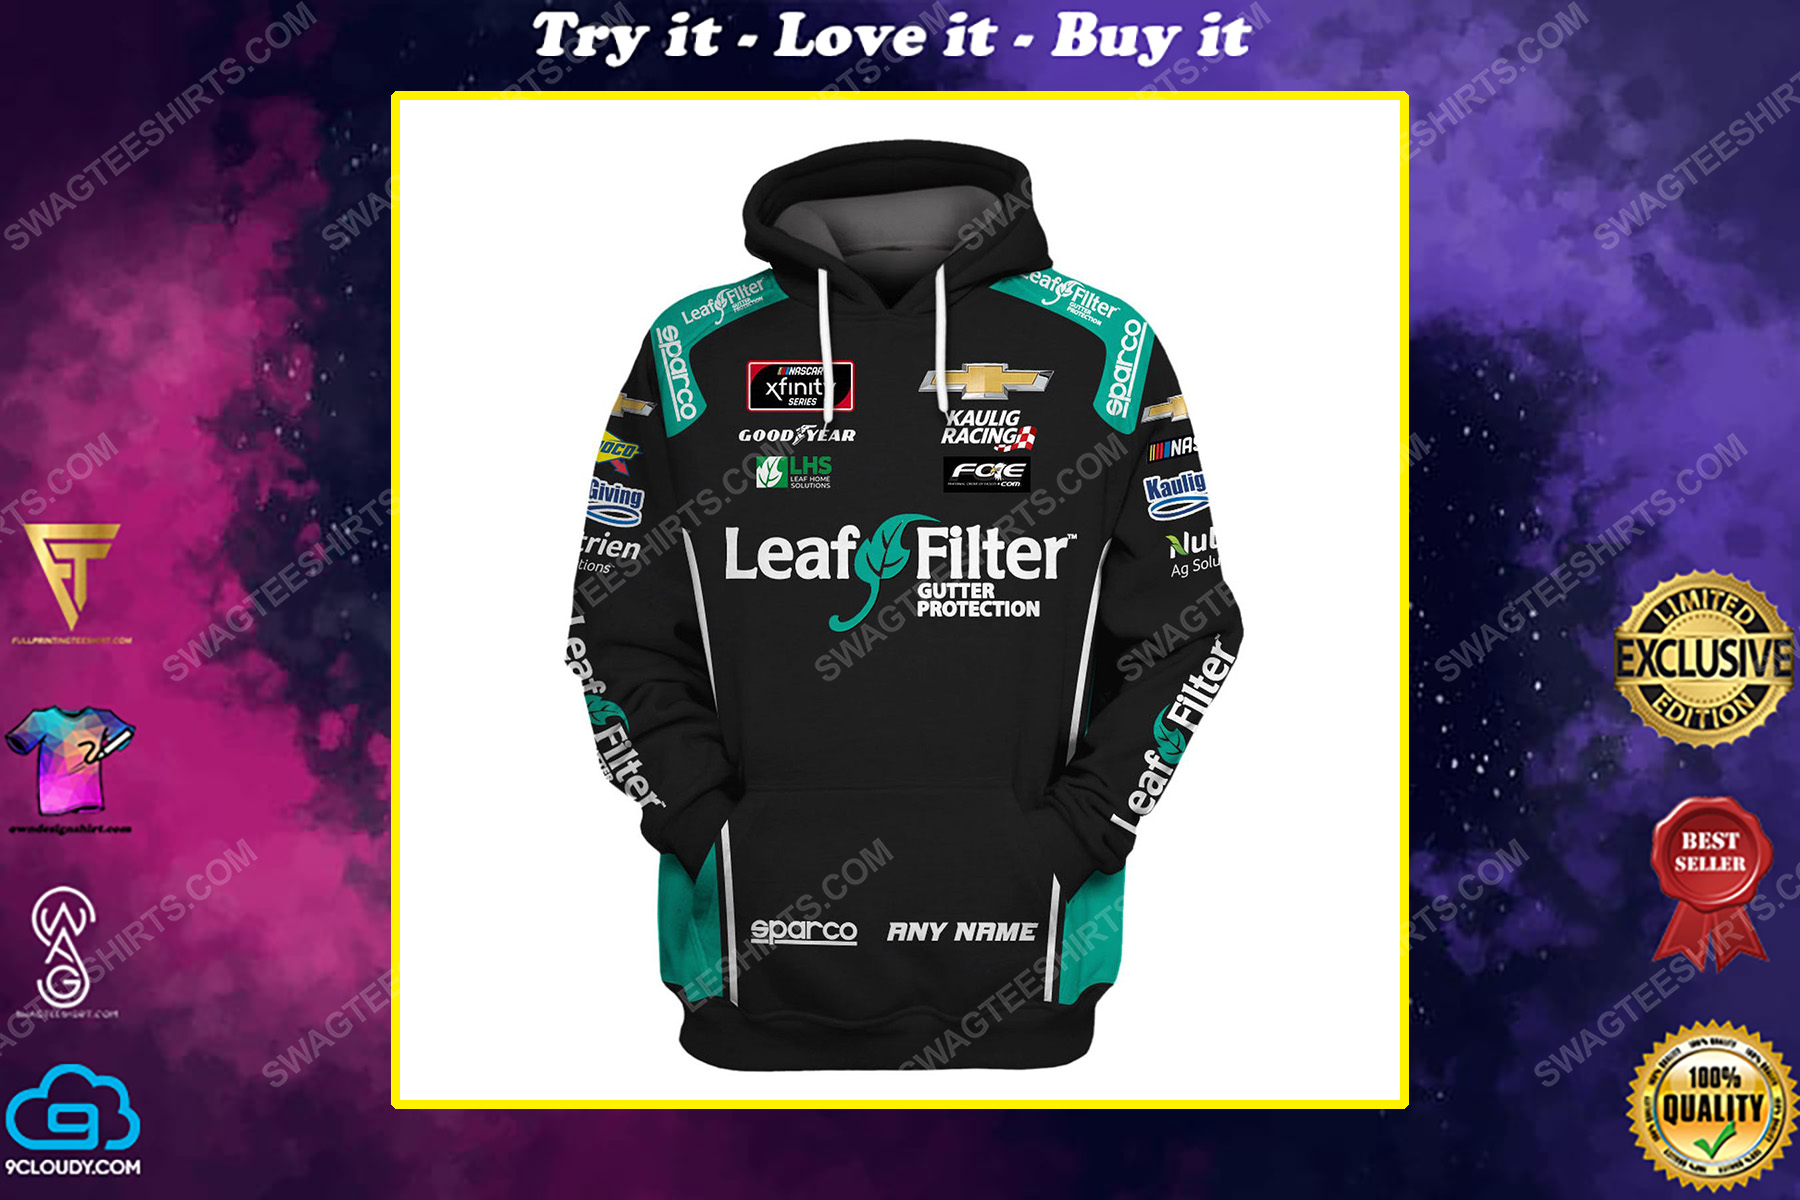 Custom leaffilter gutter protection racing team motorsport full printing shirt